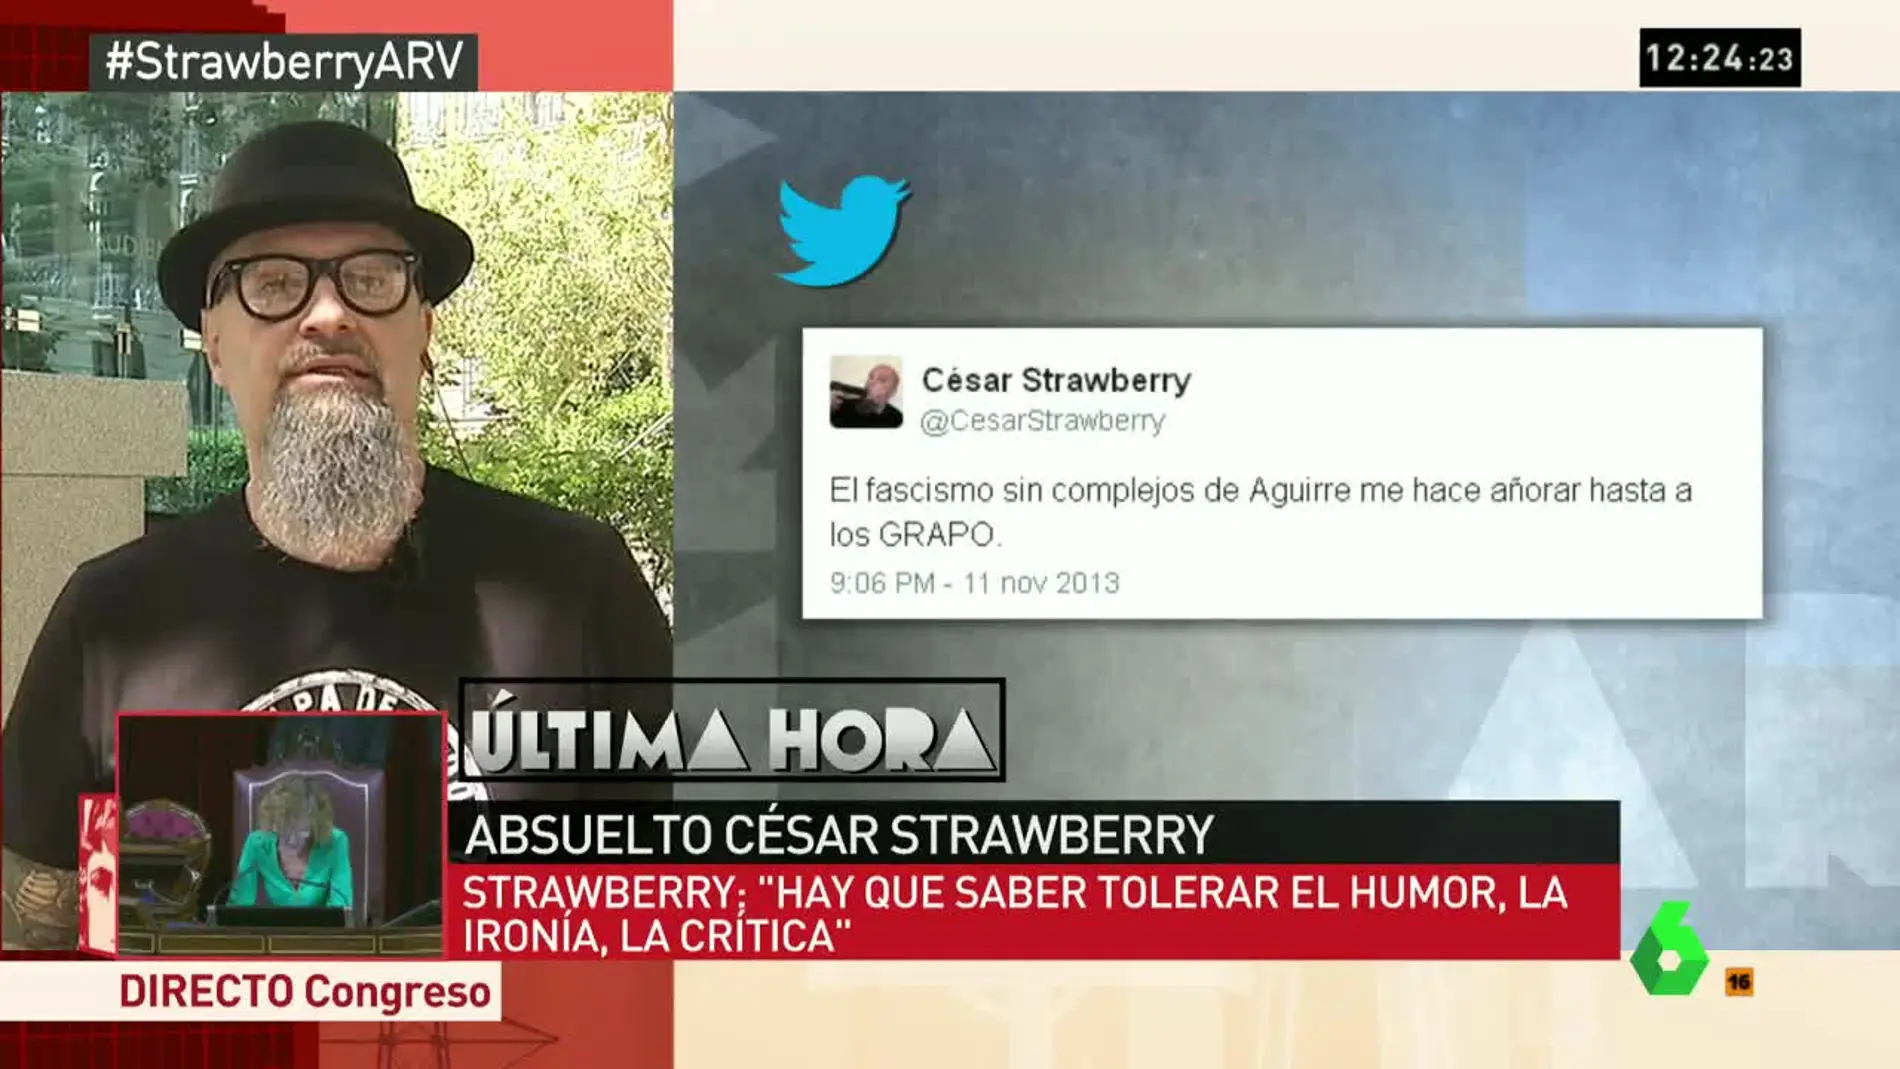 Cesar Strawberry